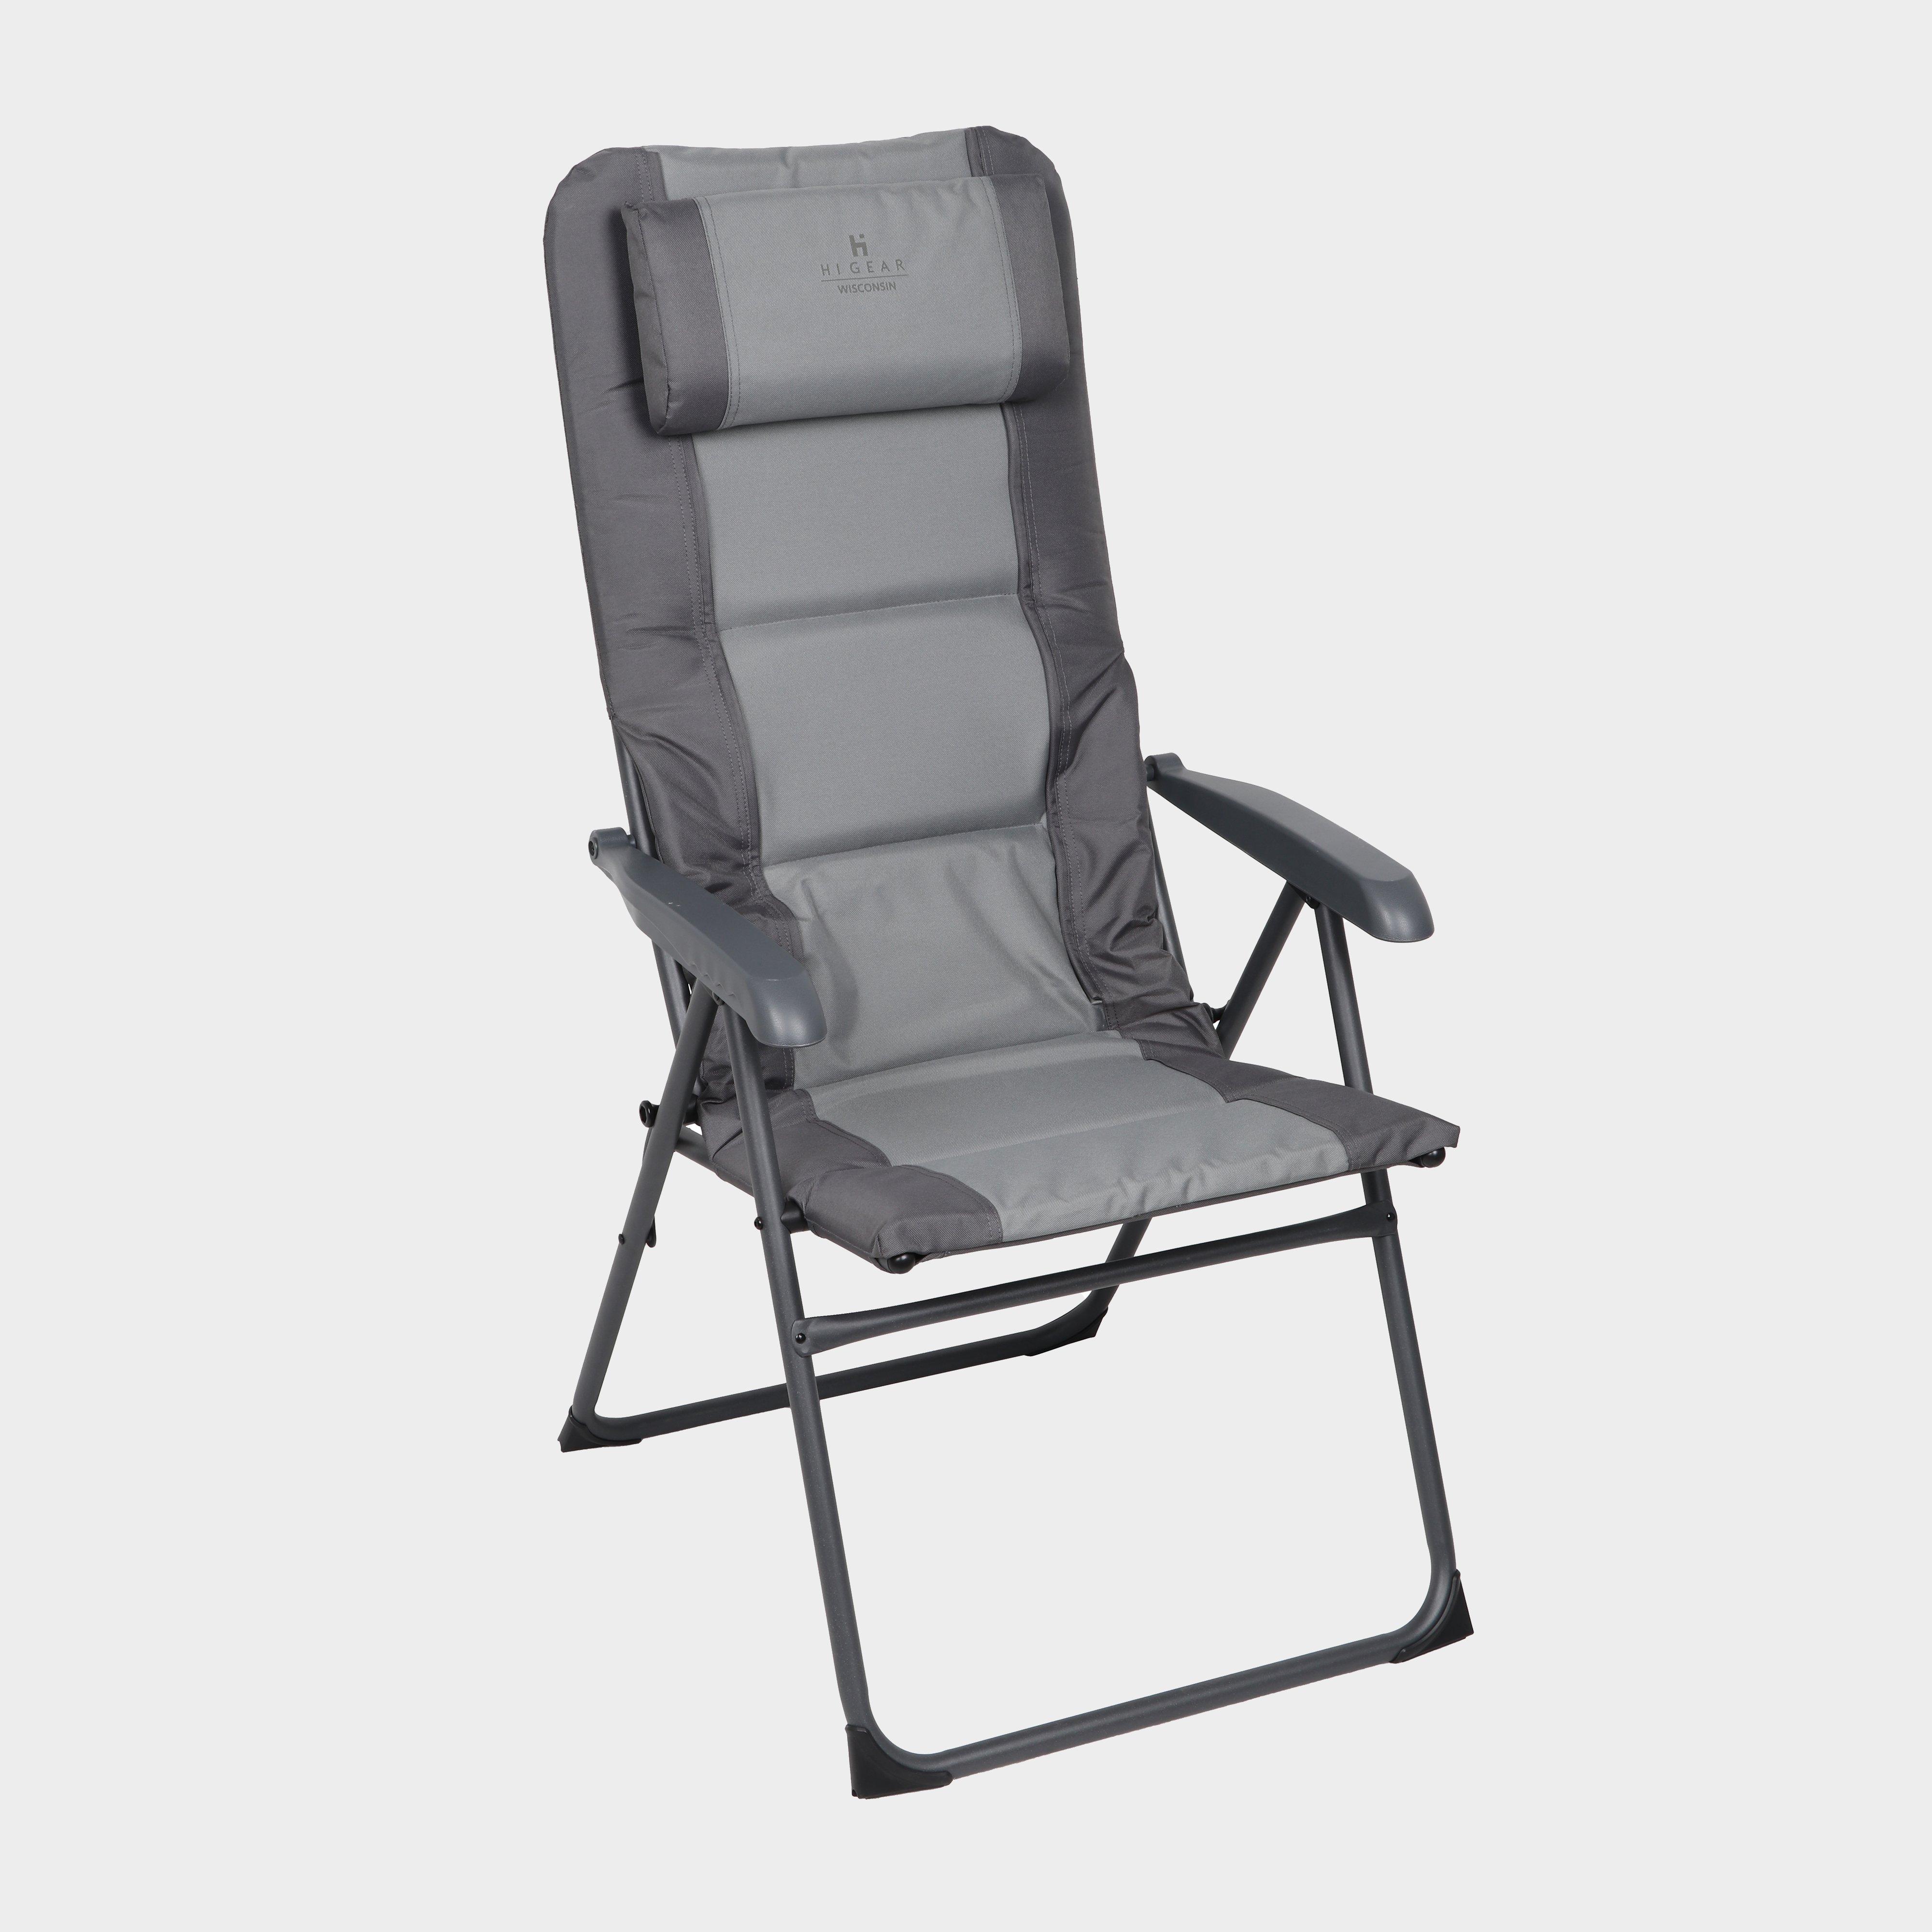  HI-GEAR Wisconsin Folding Camping Chair, Grey